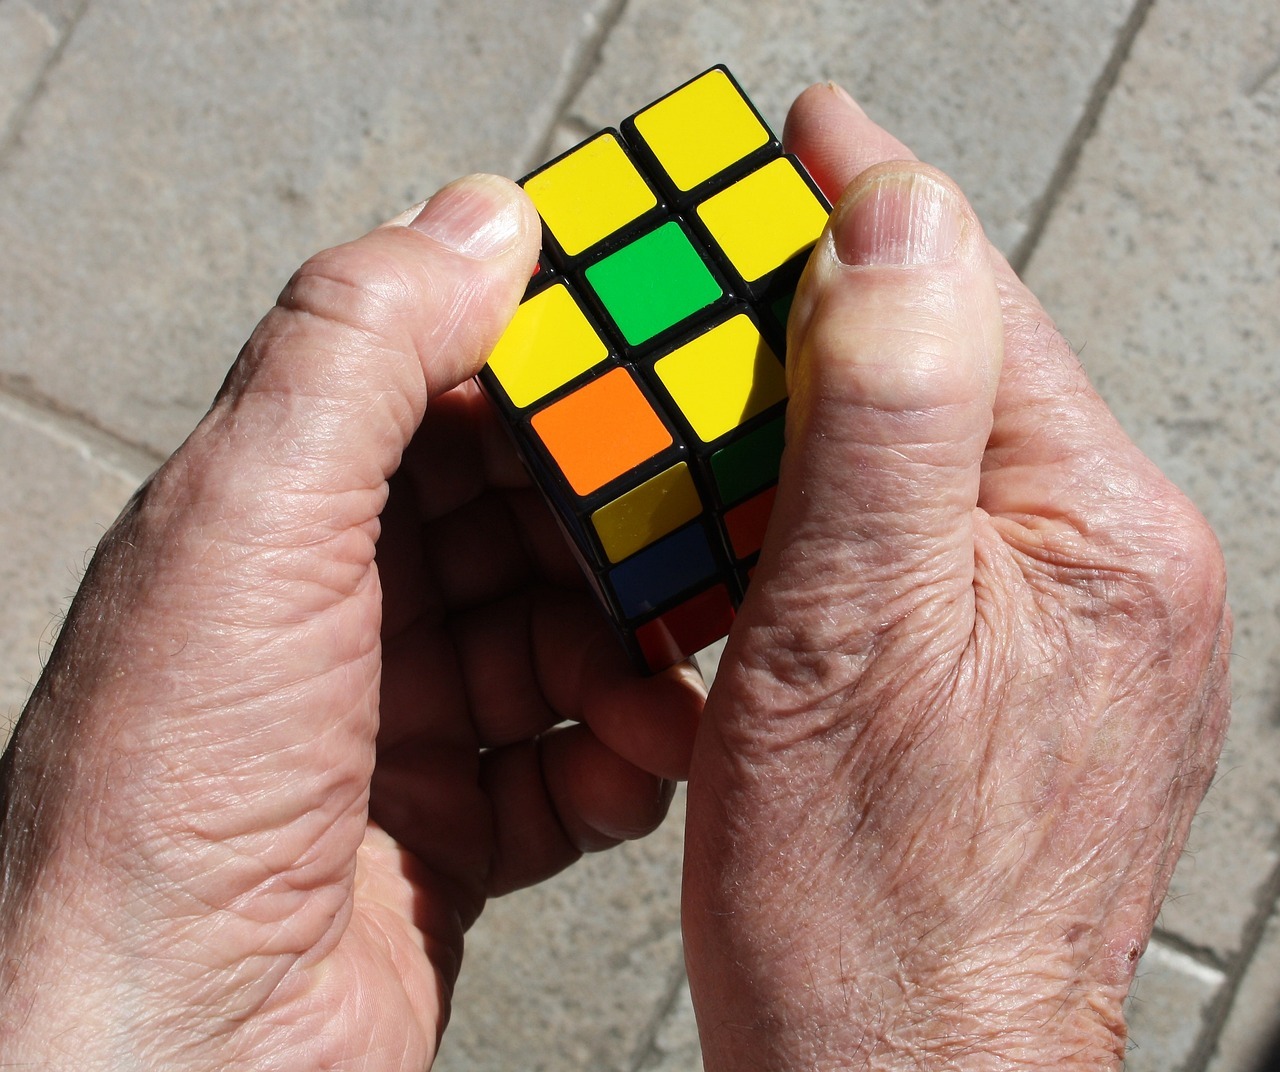 Elderly man working on solving a Rubik’s cube